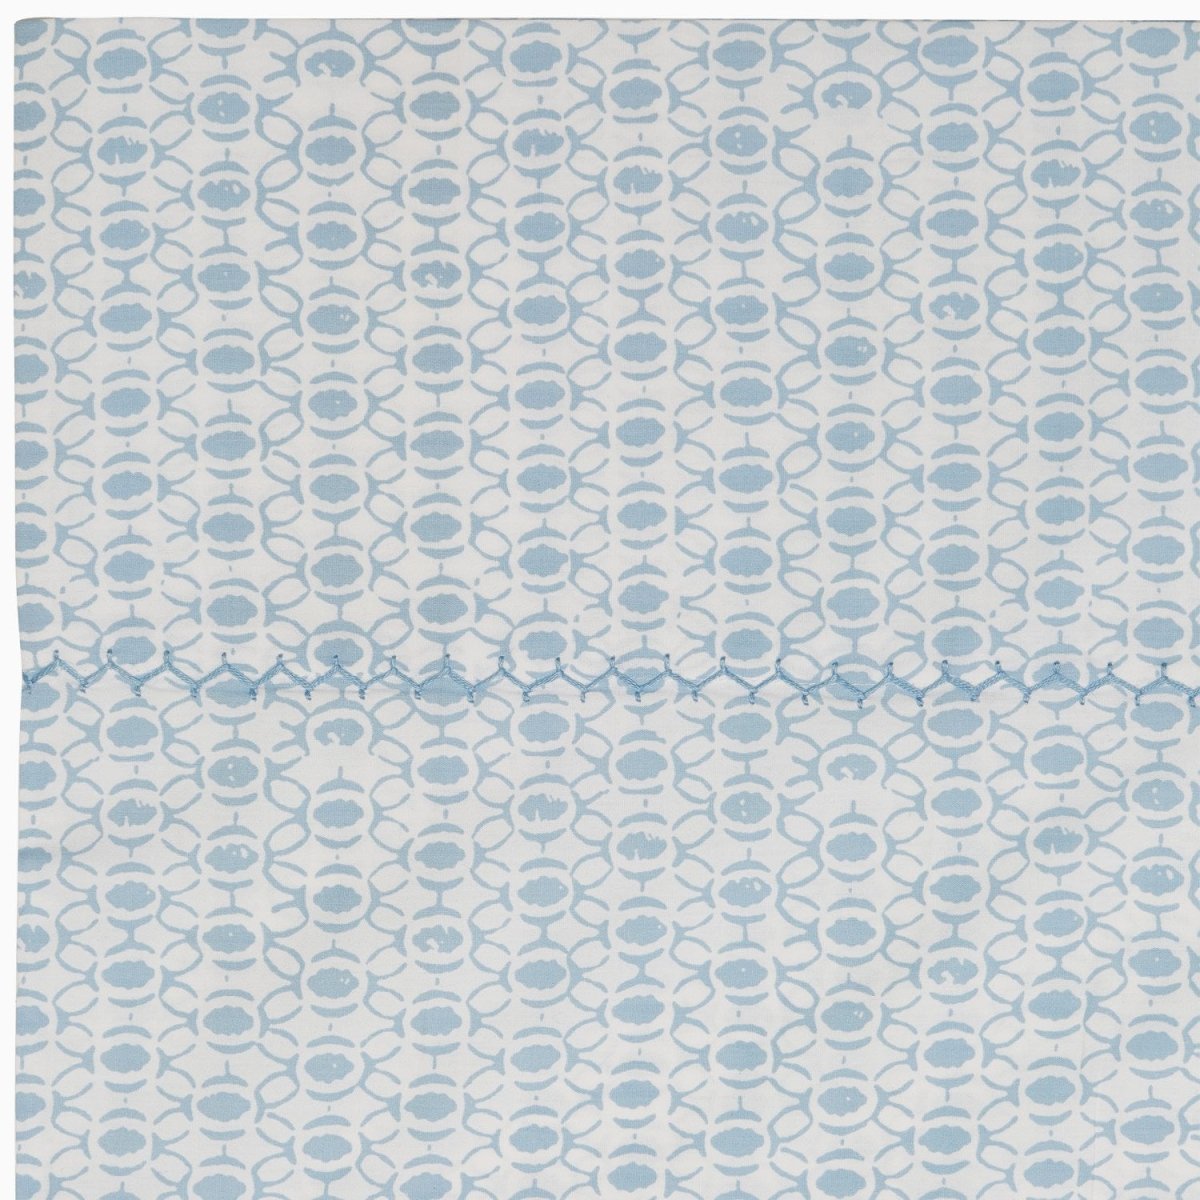 Fig Linens - Kama Light Indigo Sheet Sets by John Robshaw - Stitching detail